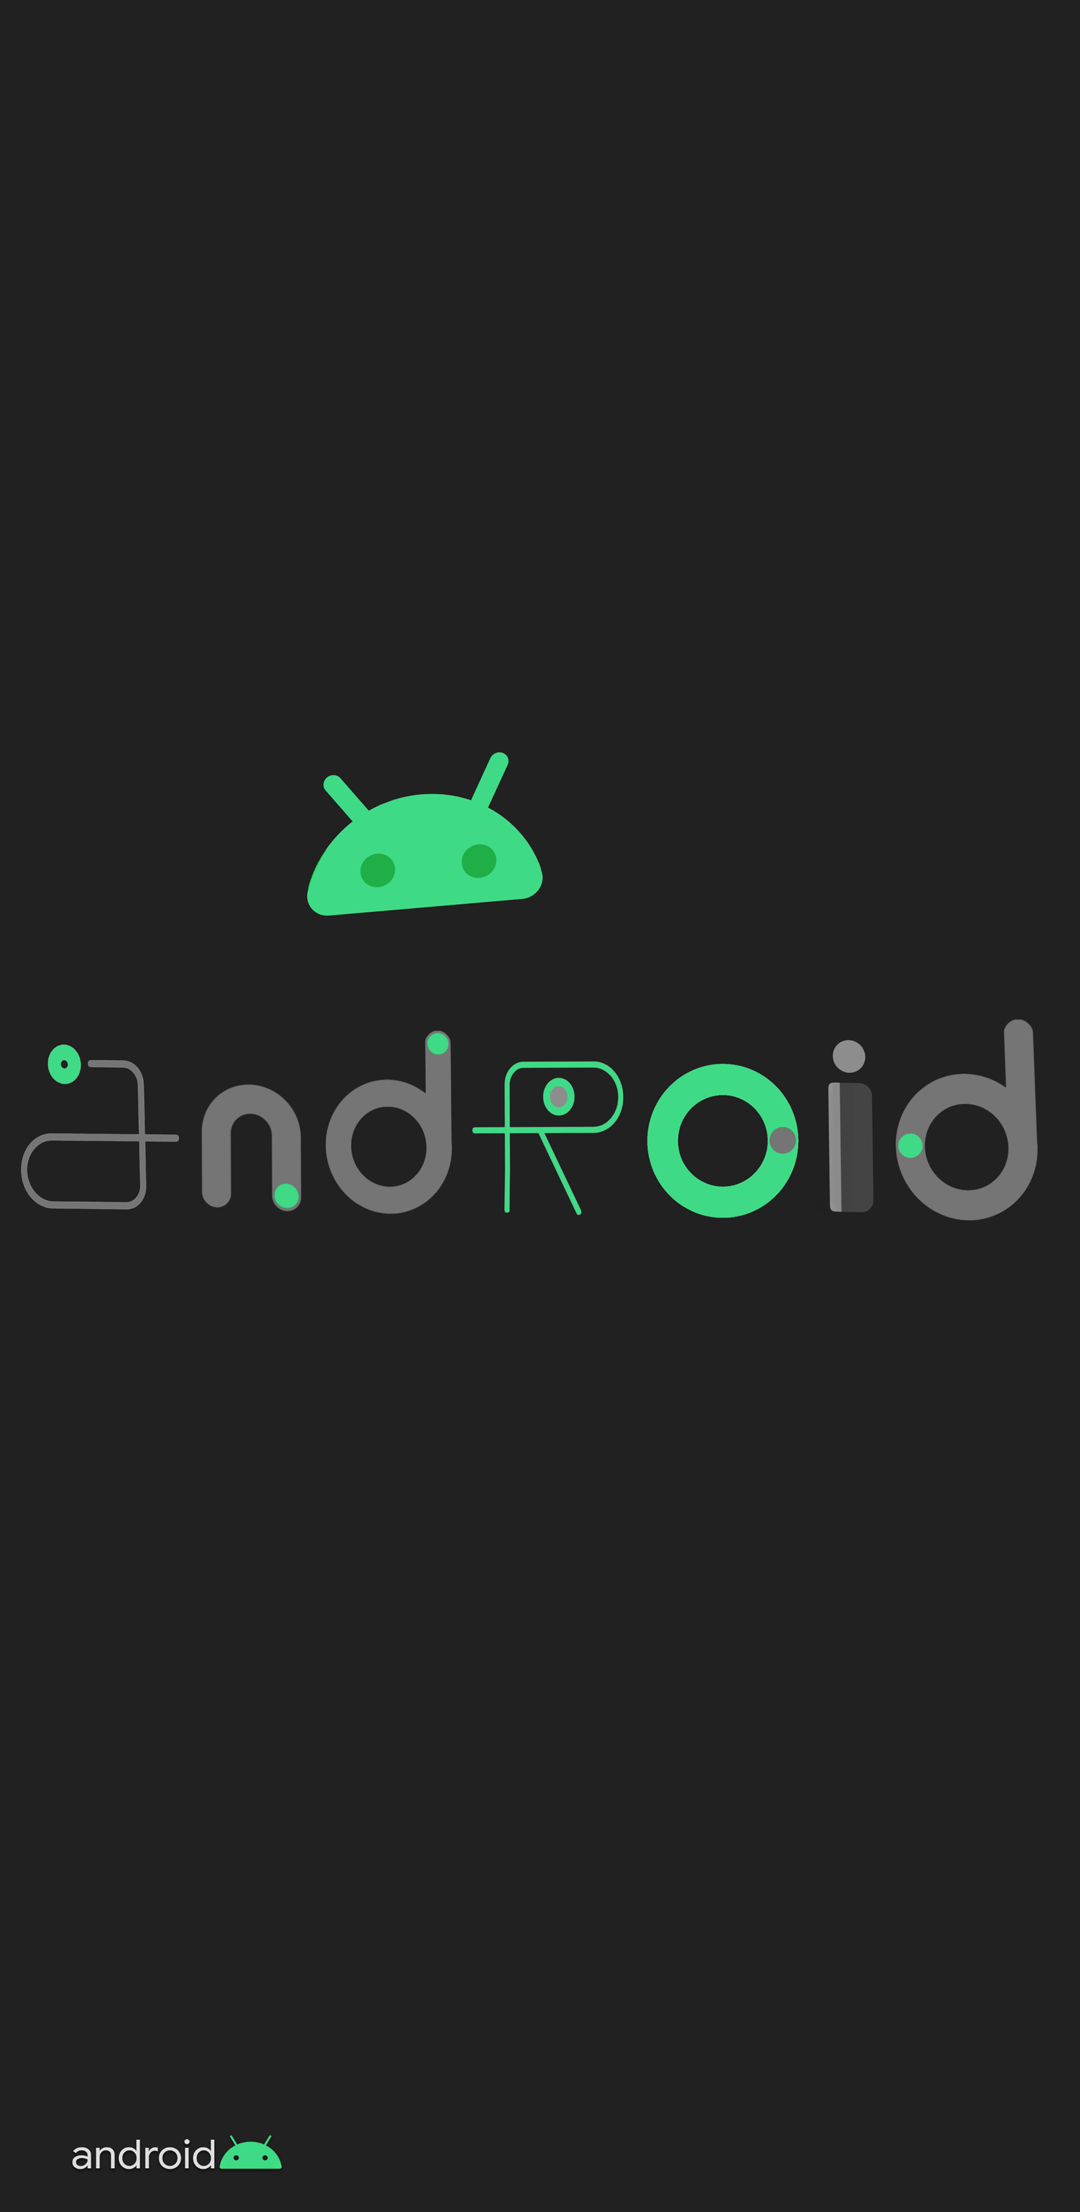 android wallpaper,green,logo,text,font,graphics